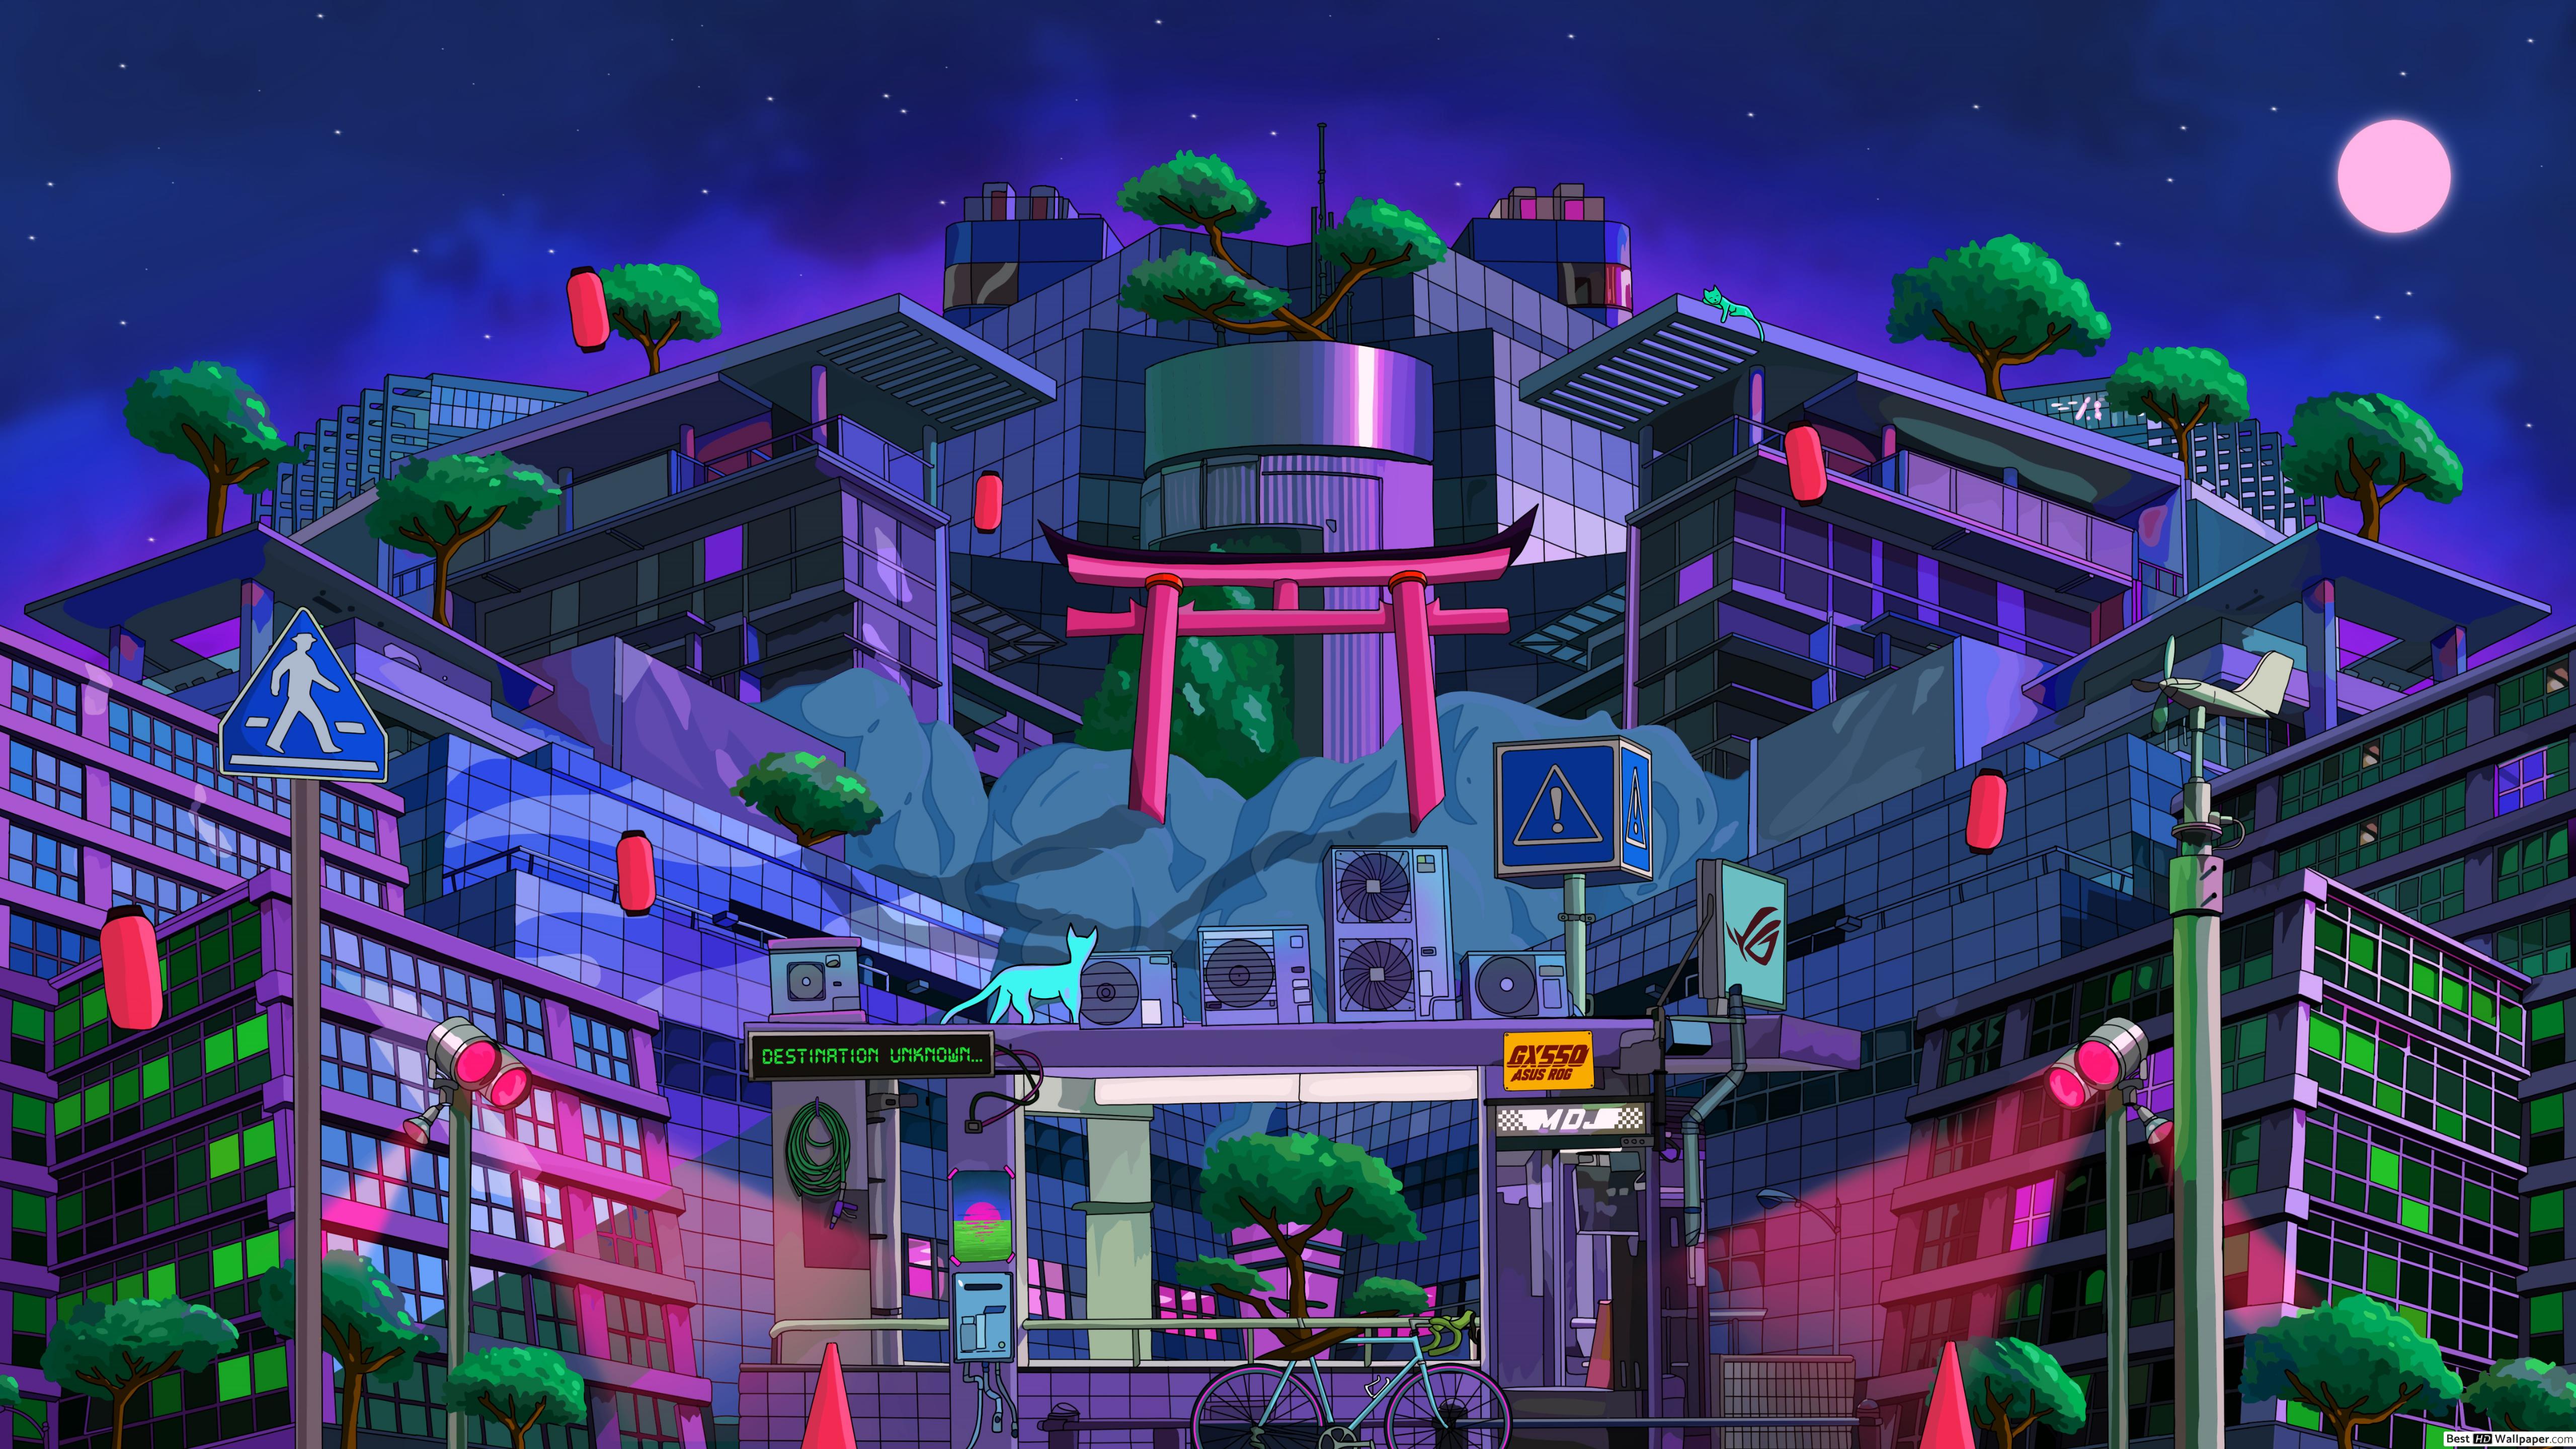 Asus ROG (Republic of Gamers) Asus 'Zephyrus' Cyber City (NIght Theme) HD wallpaper download